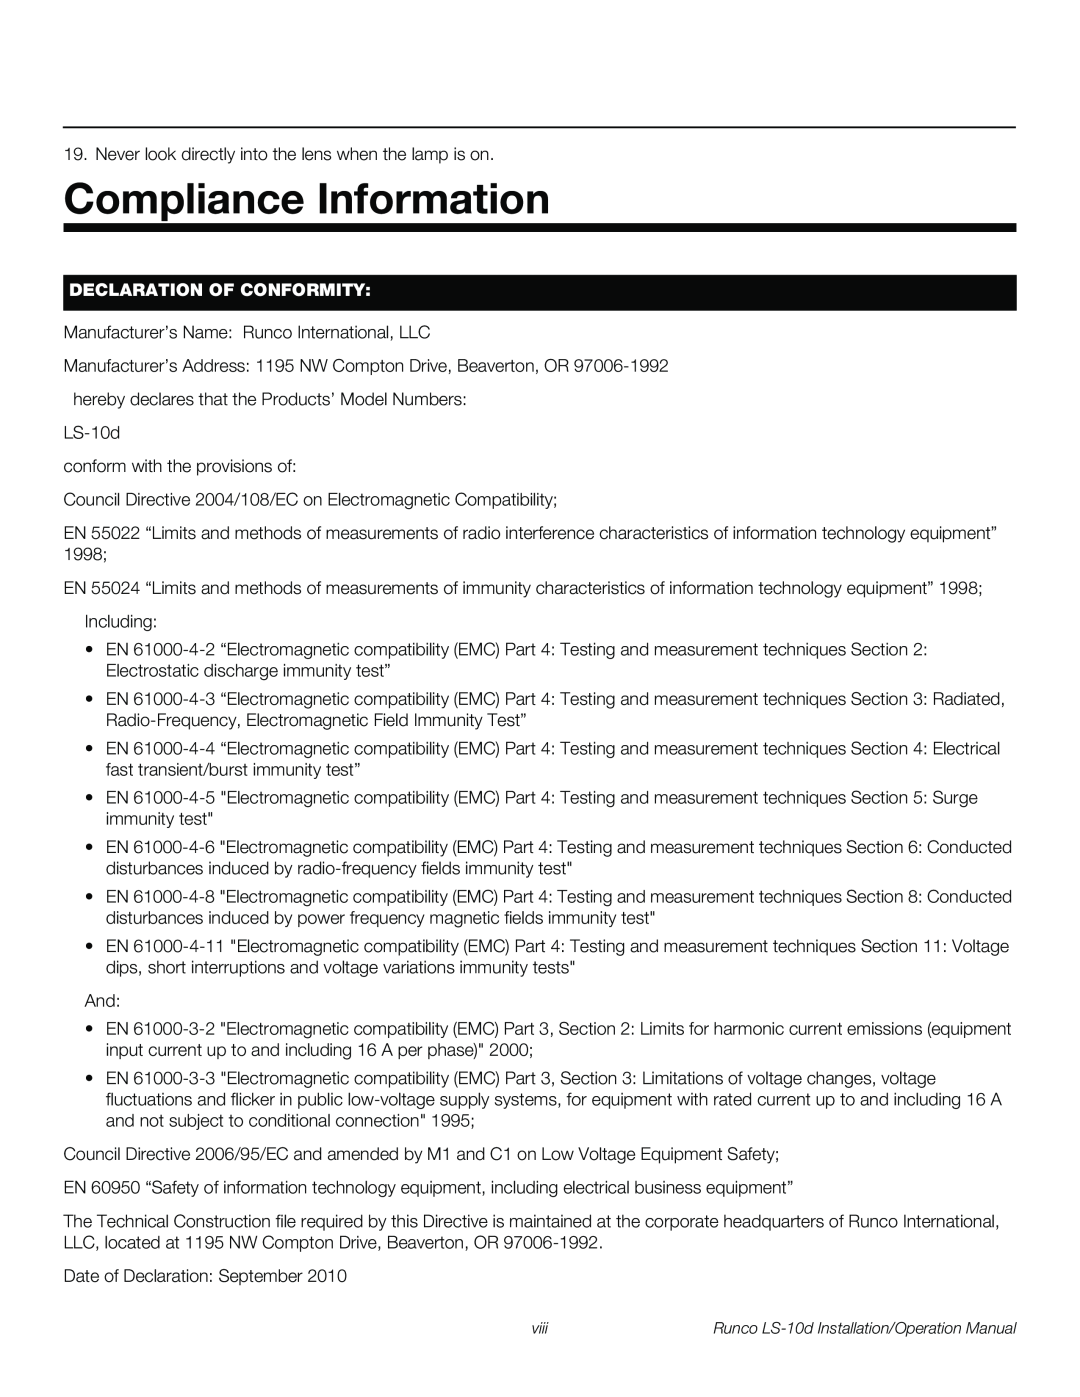 Runco LS-10D operation manual Compliance Information, Declaration Of Conformity 